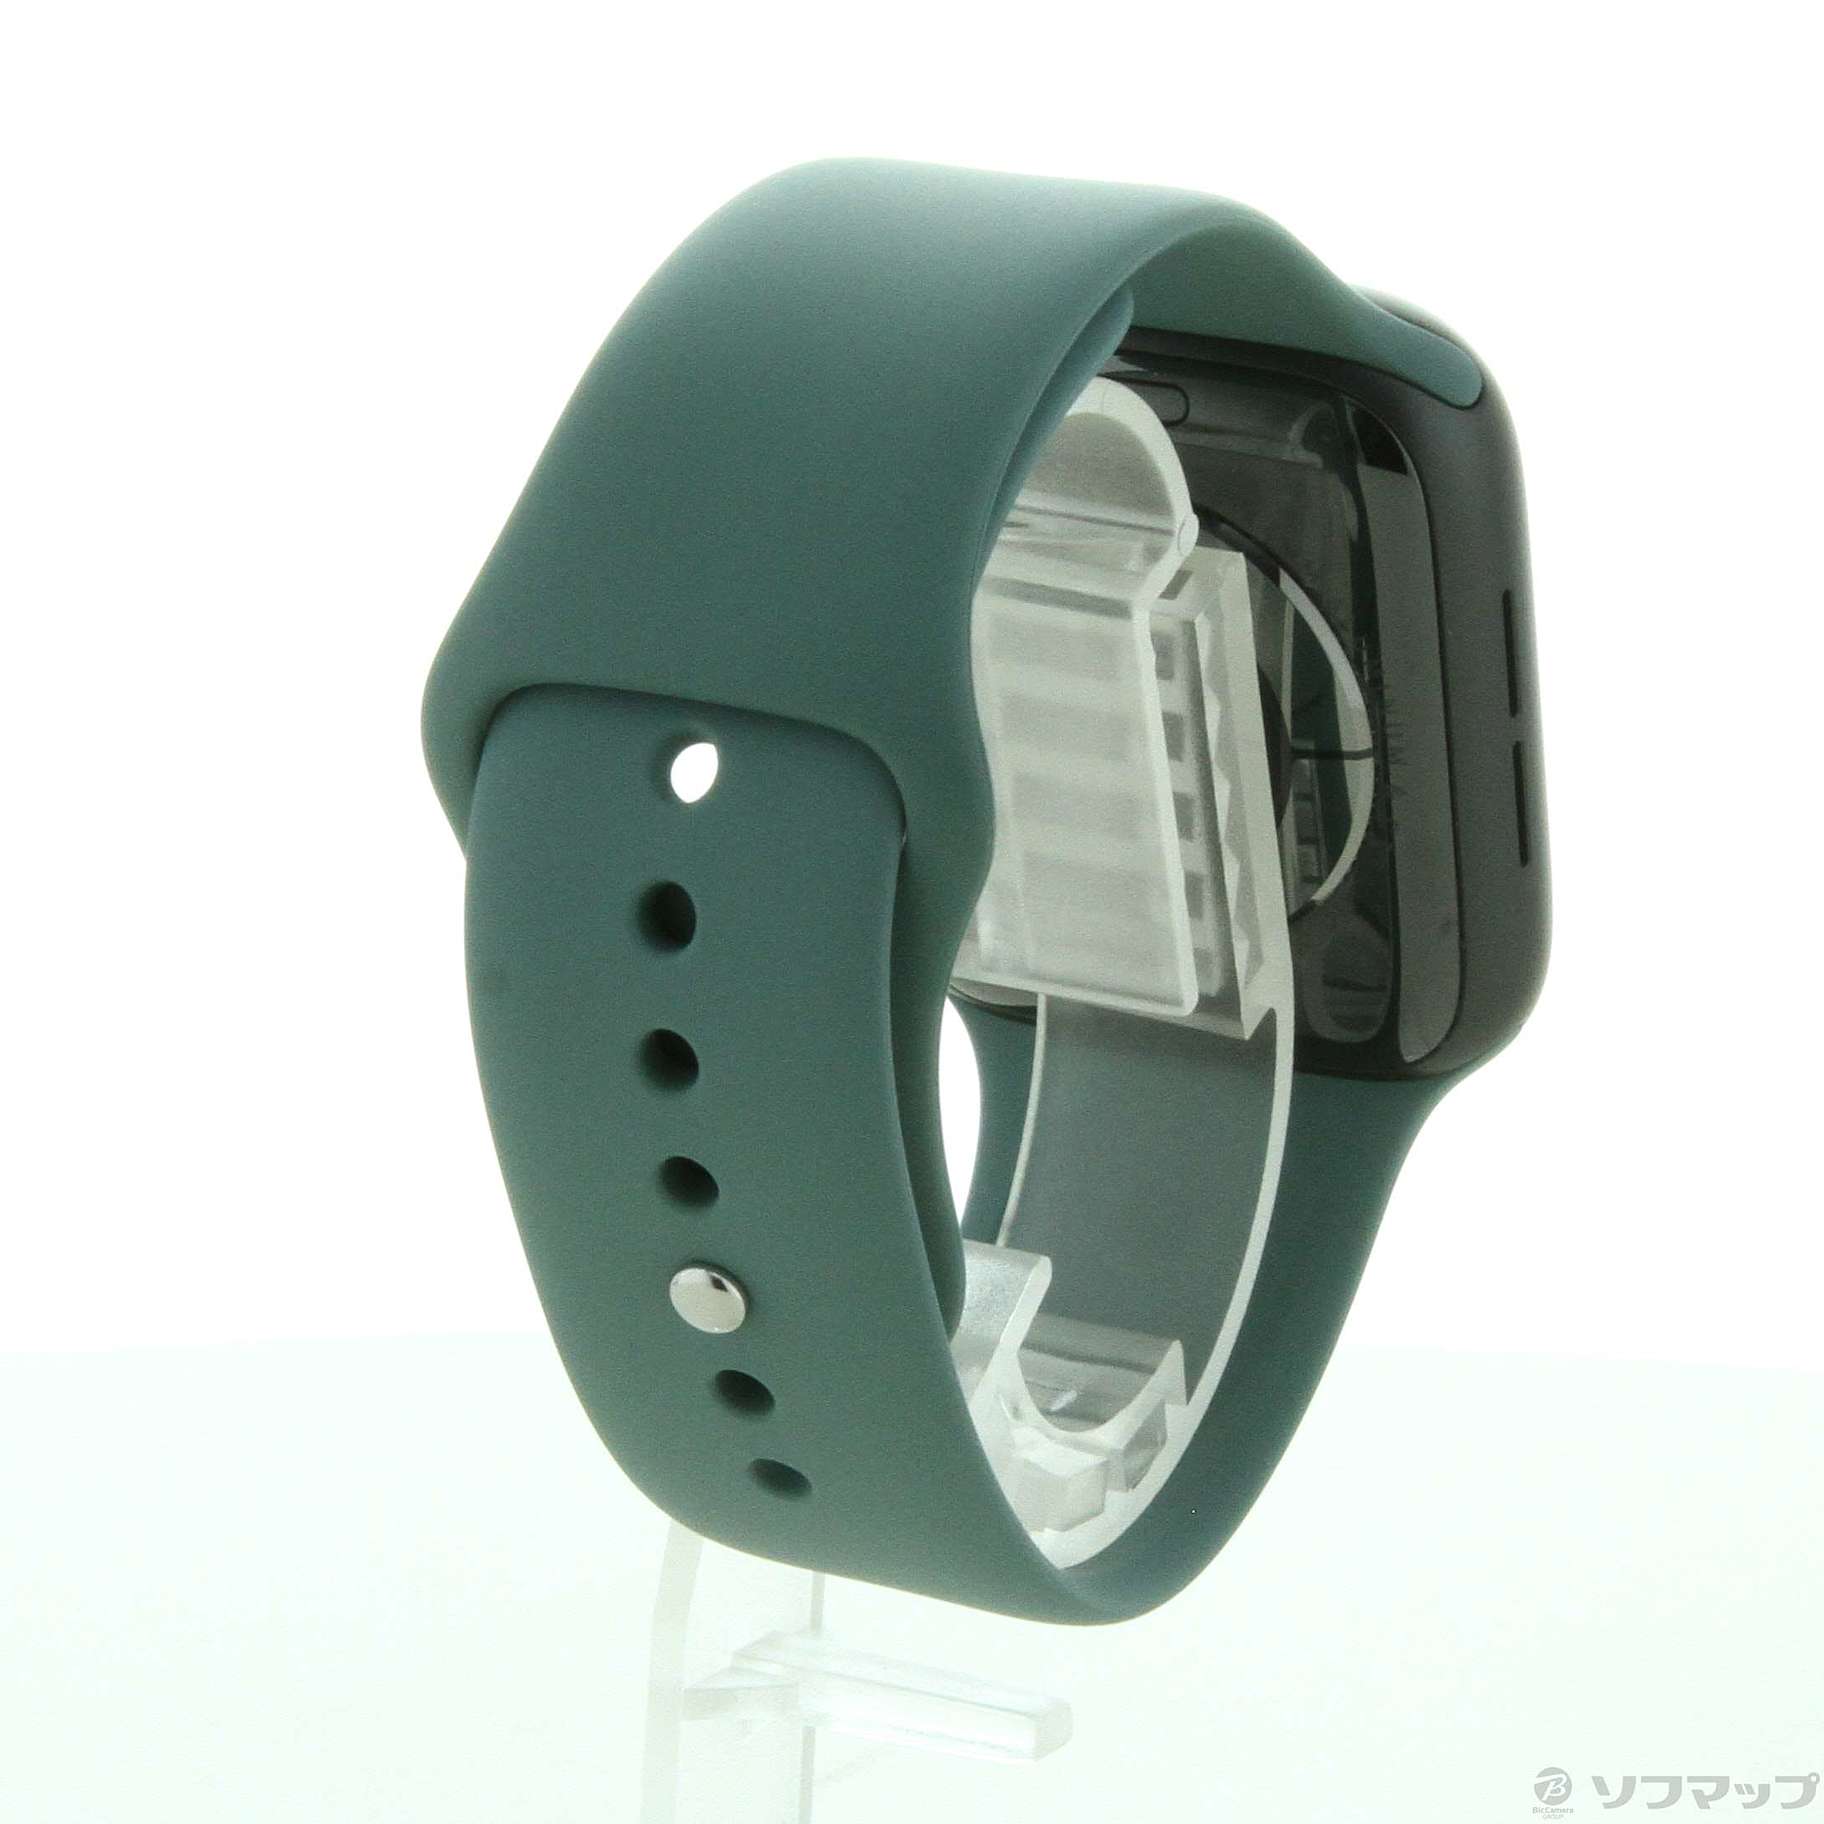 www.uctosoukup.cz - Apple Apple Watch Series5 44mm GPSモデル